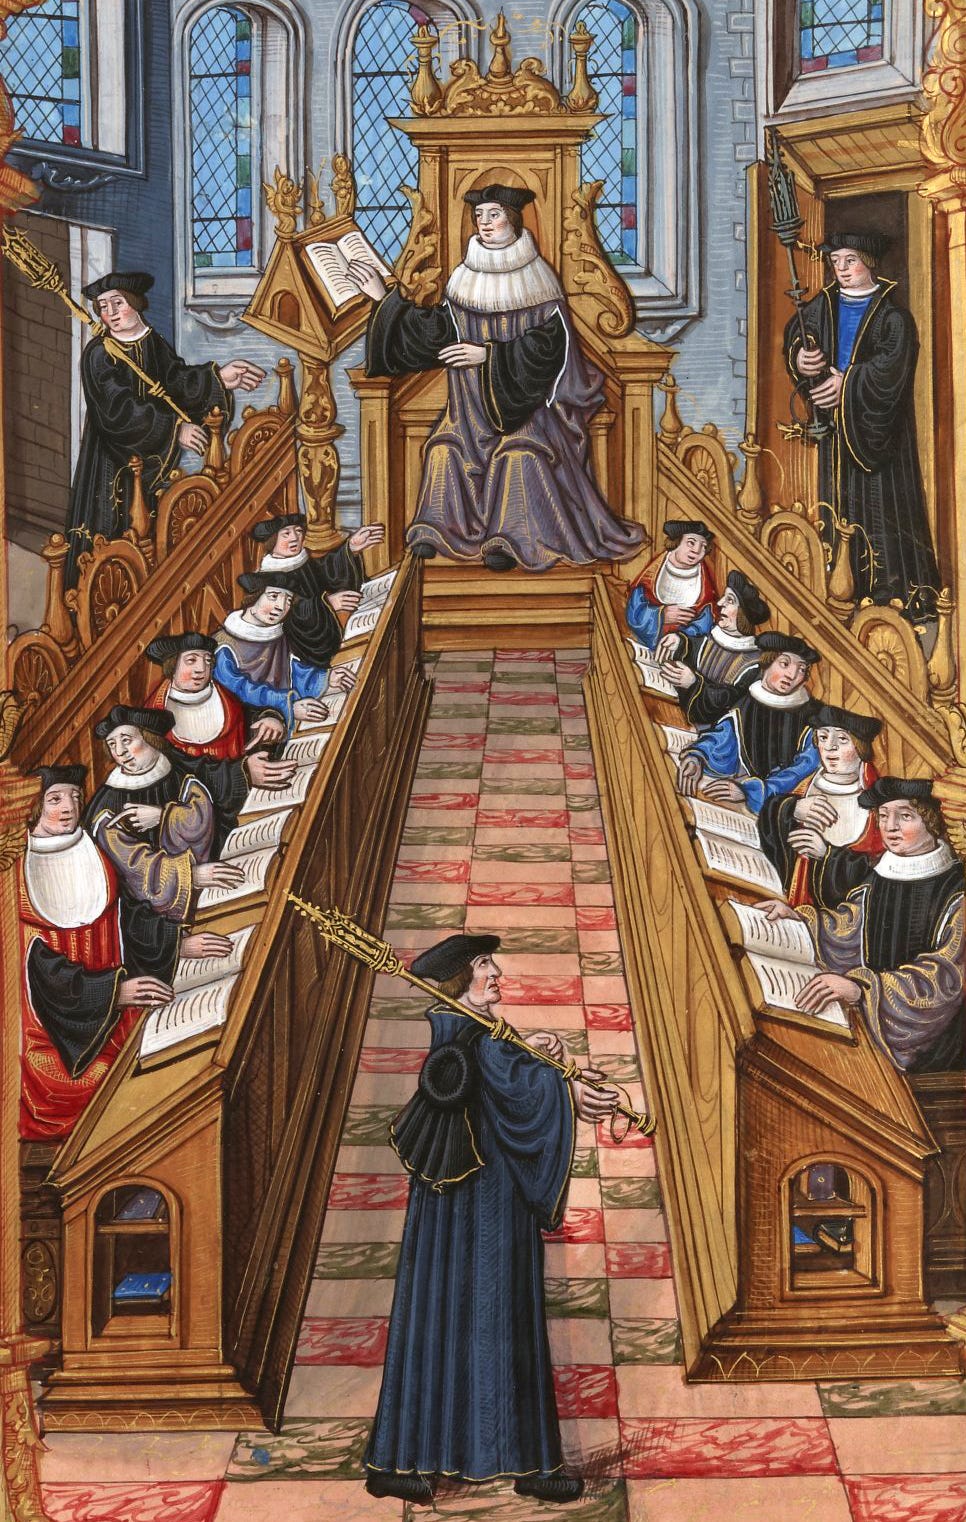 Medieval university - Wikipedia